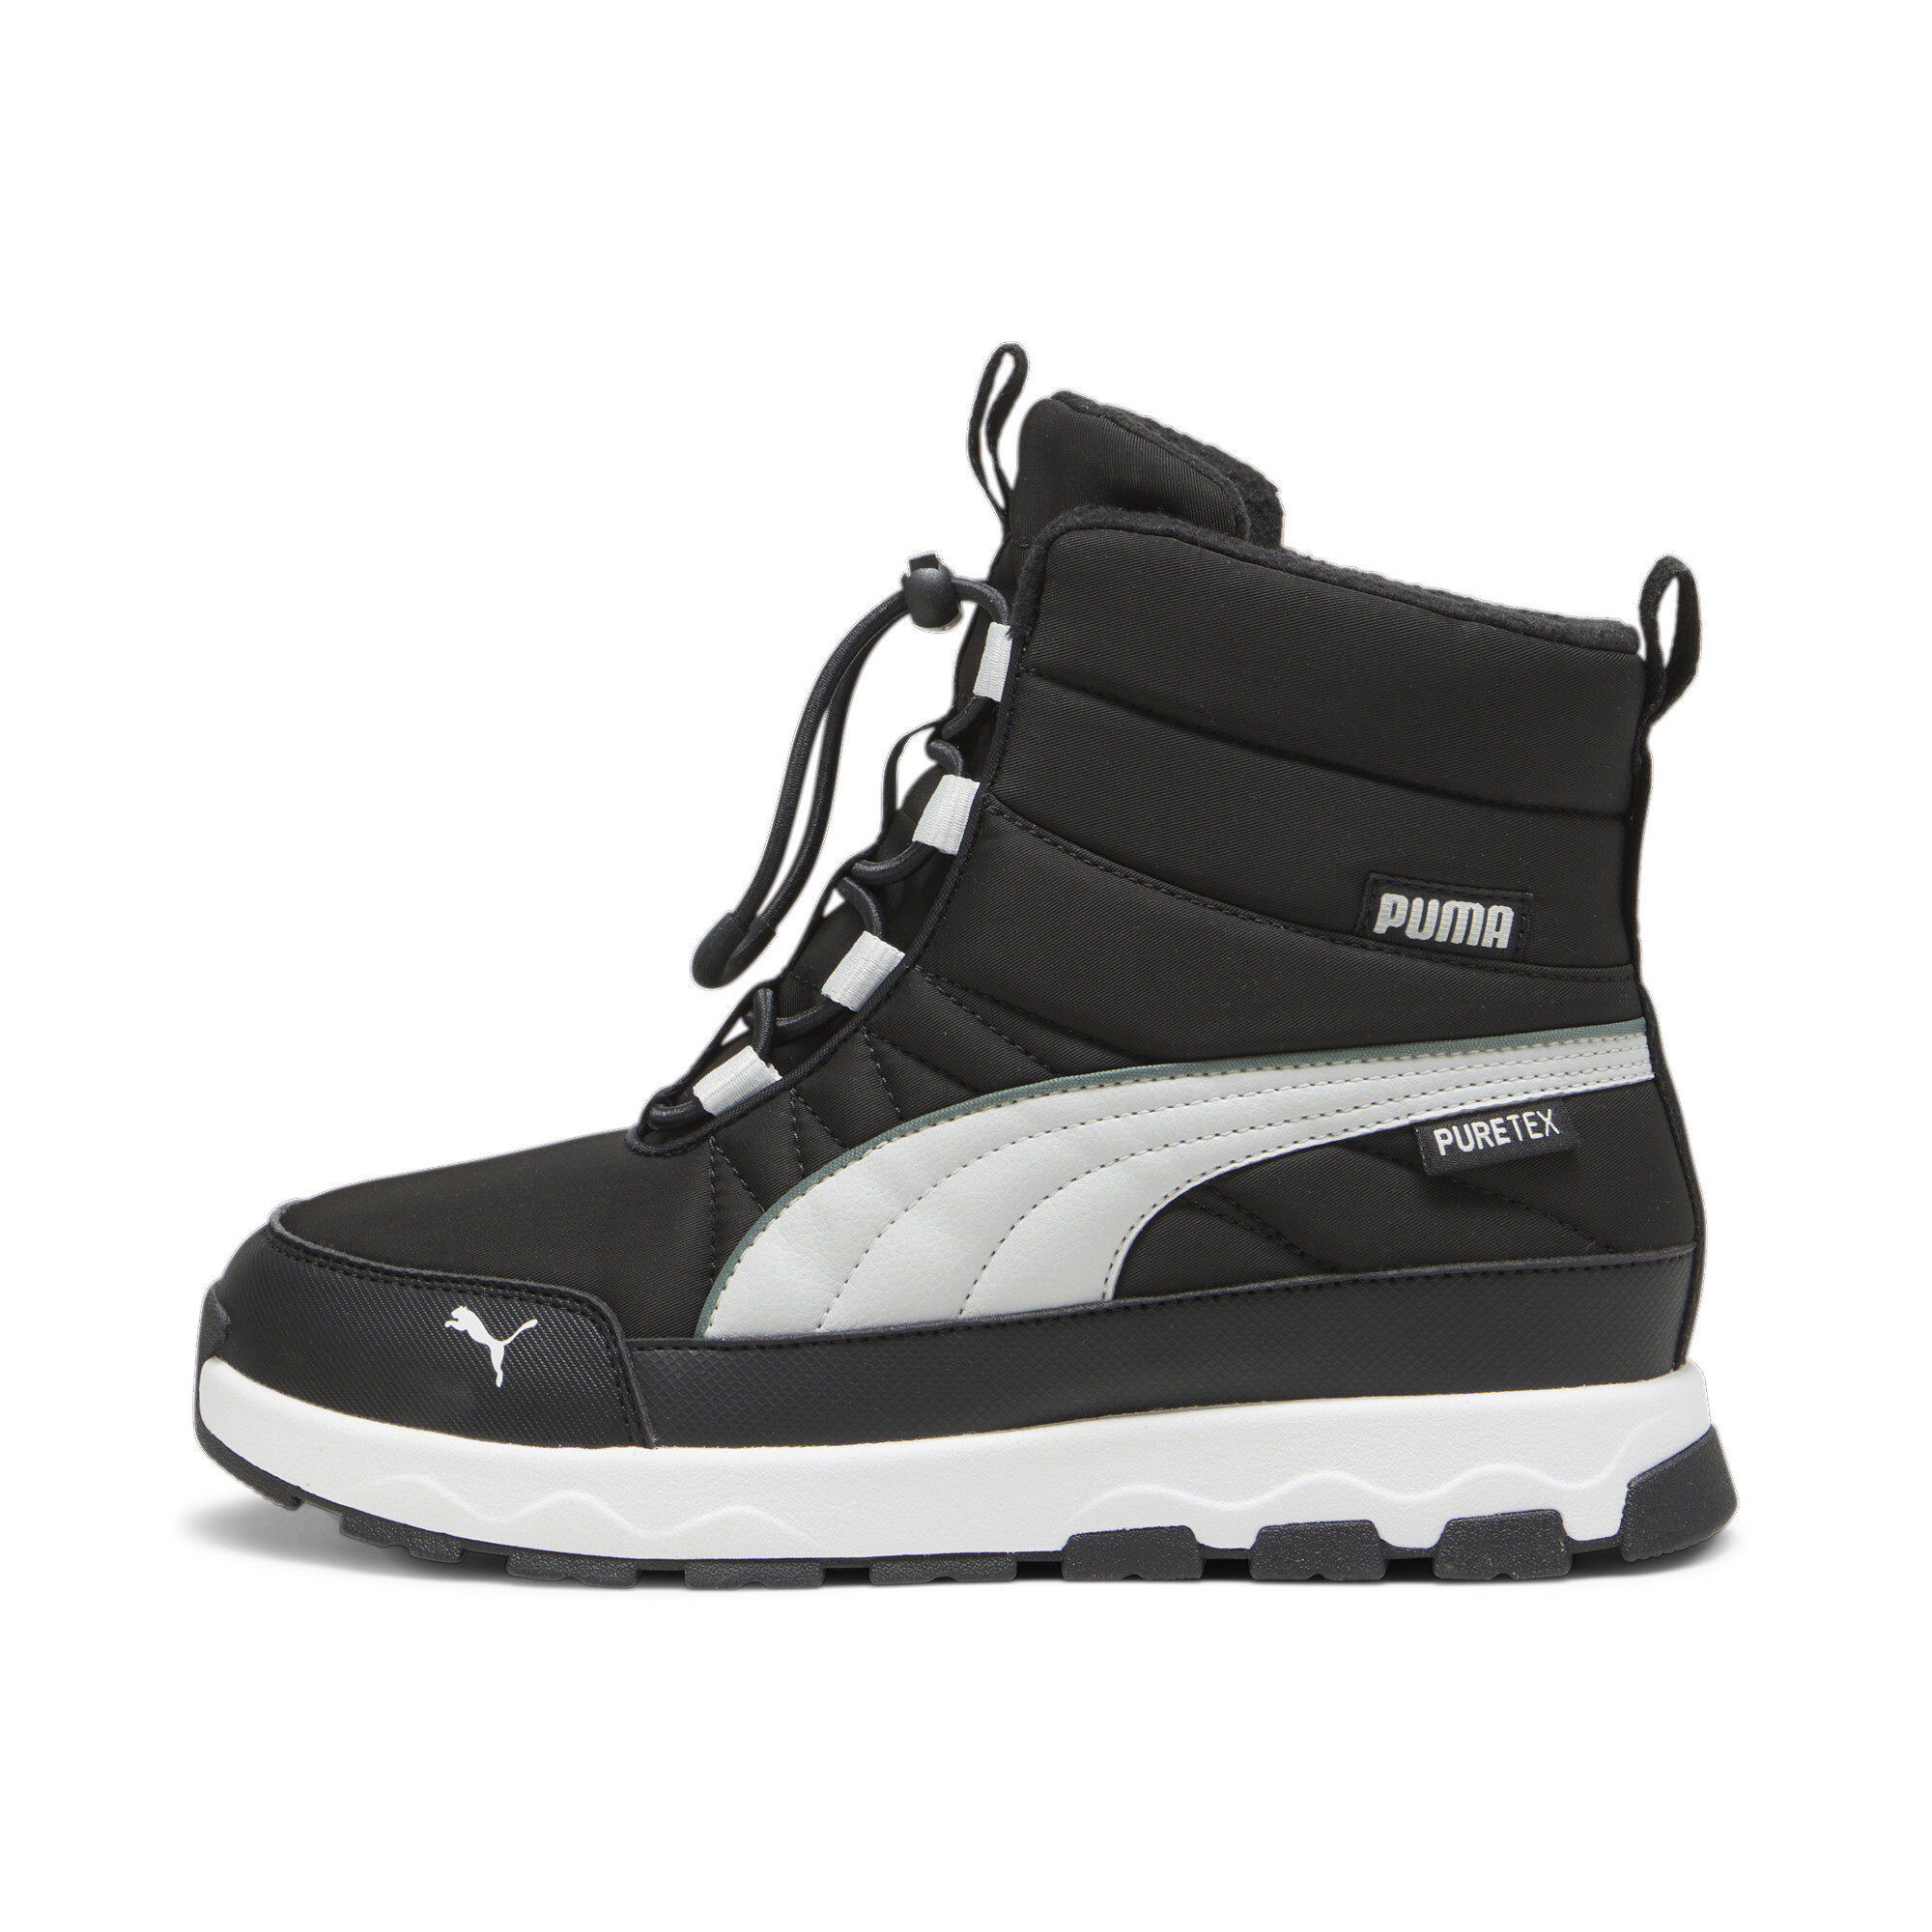 Puma Evolve Puretex Youth Boots, Black, Size 38, Shoes